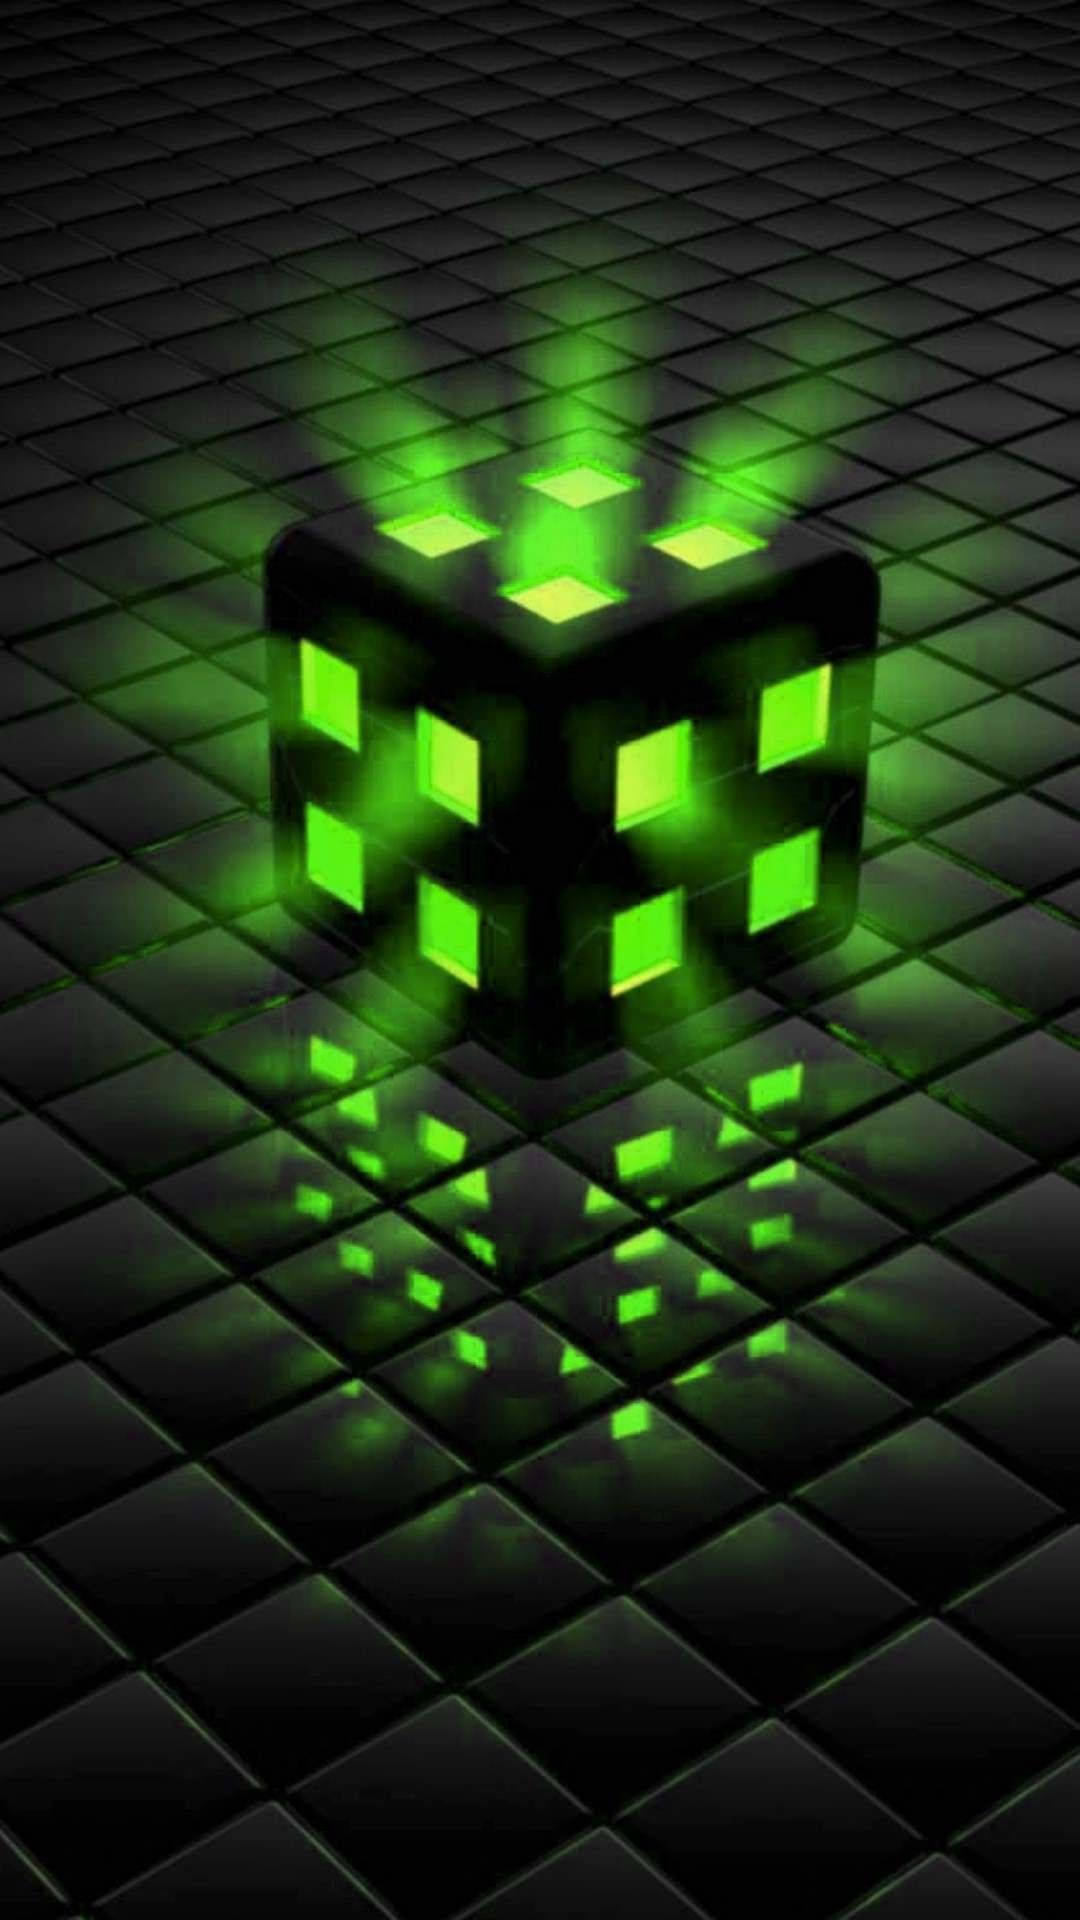 Cool Green Lit Rubik's Cube Wallpaper